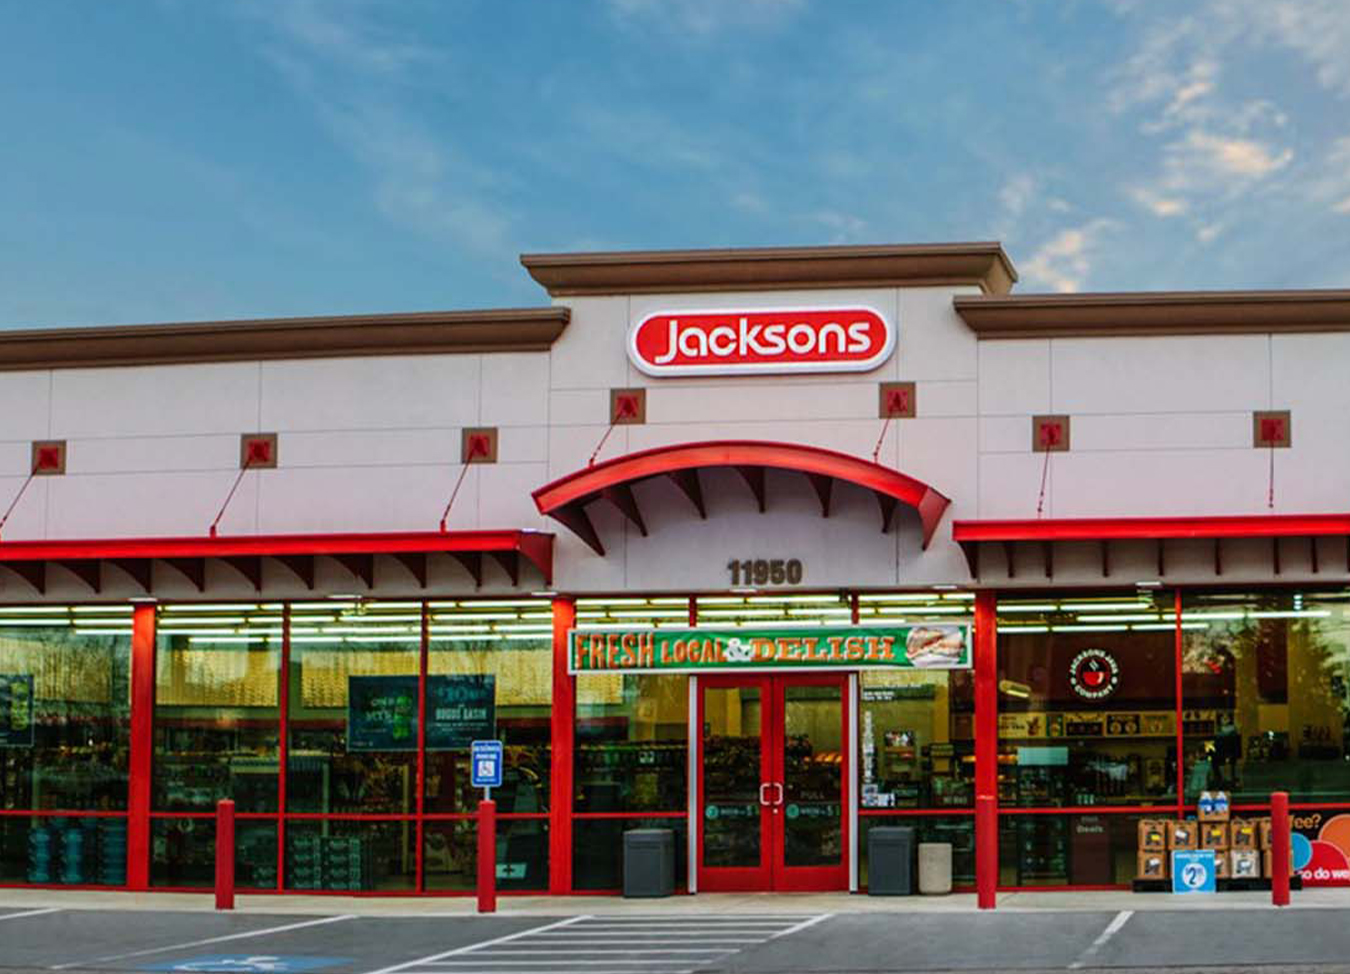 Jacksons Food Stores convenience retail location.